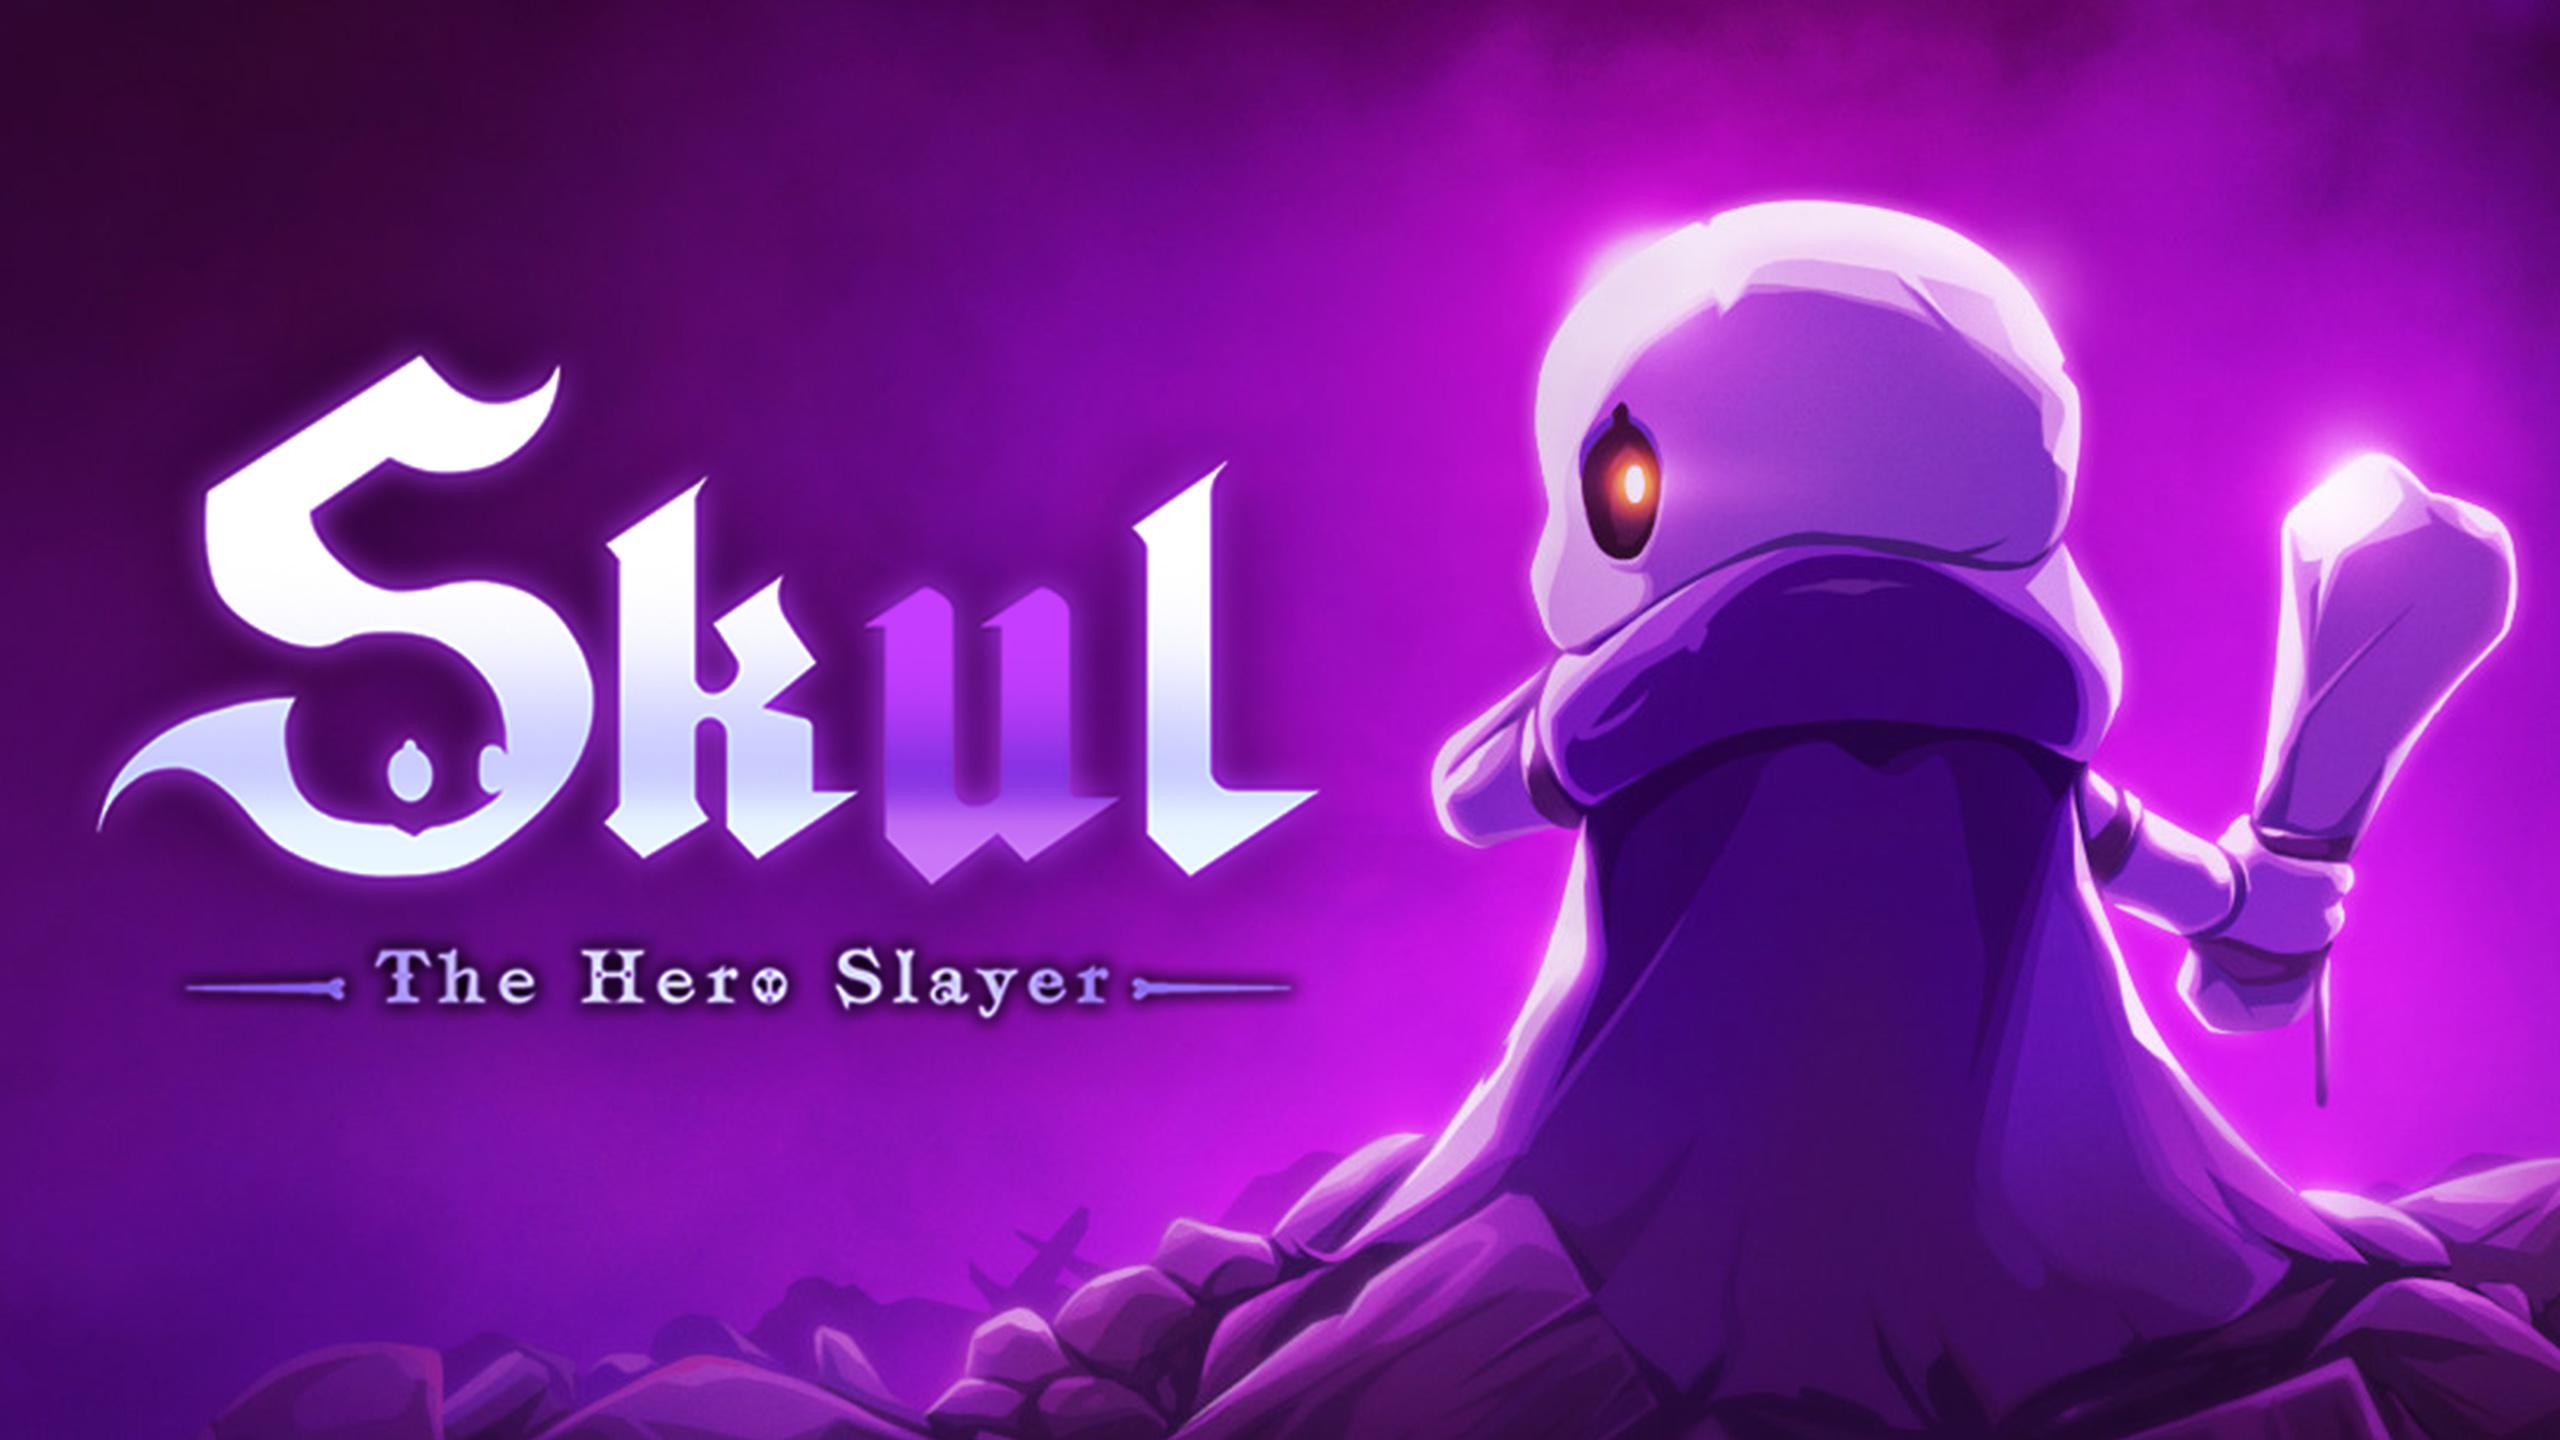  Download Game Skul The Hero Slayer Link Tải Nhanh Miễn Phí